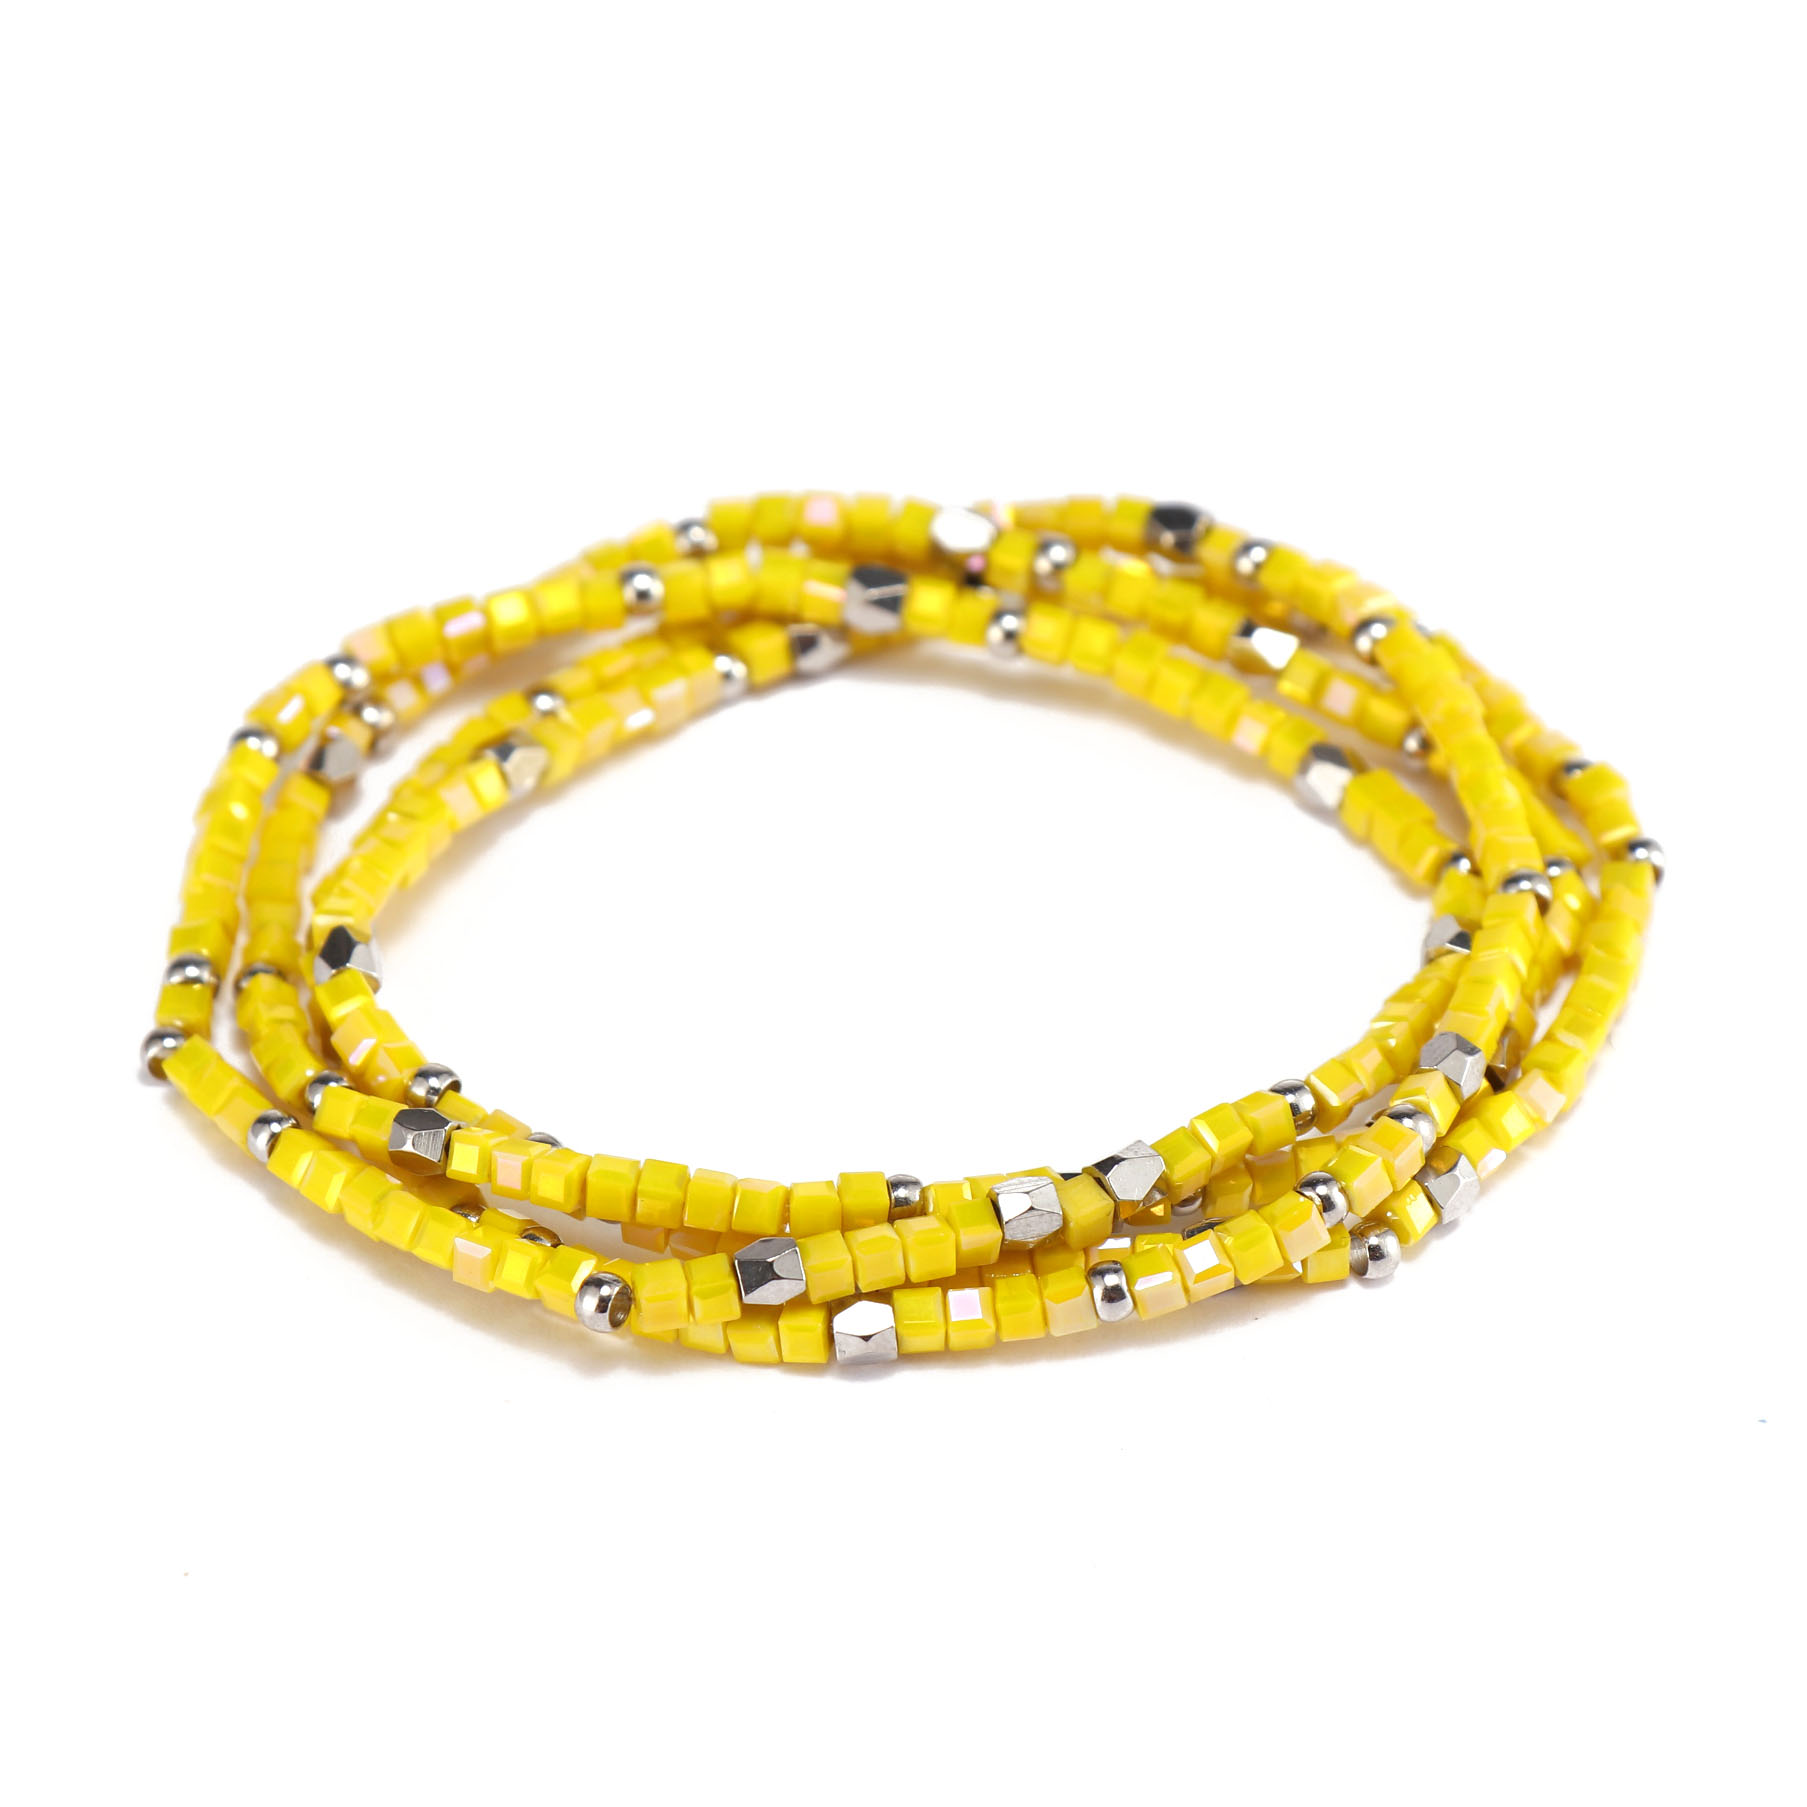 Handmade Mutilayer Crystal Beads Bracelet